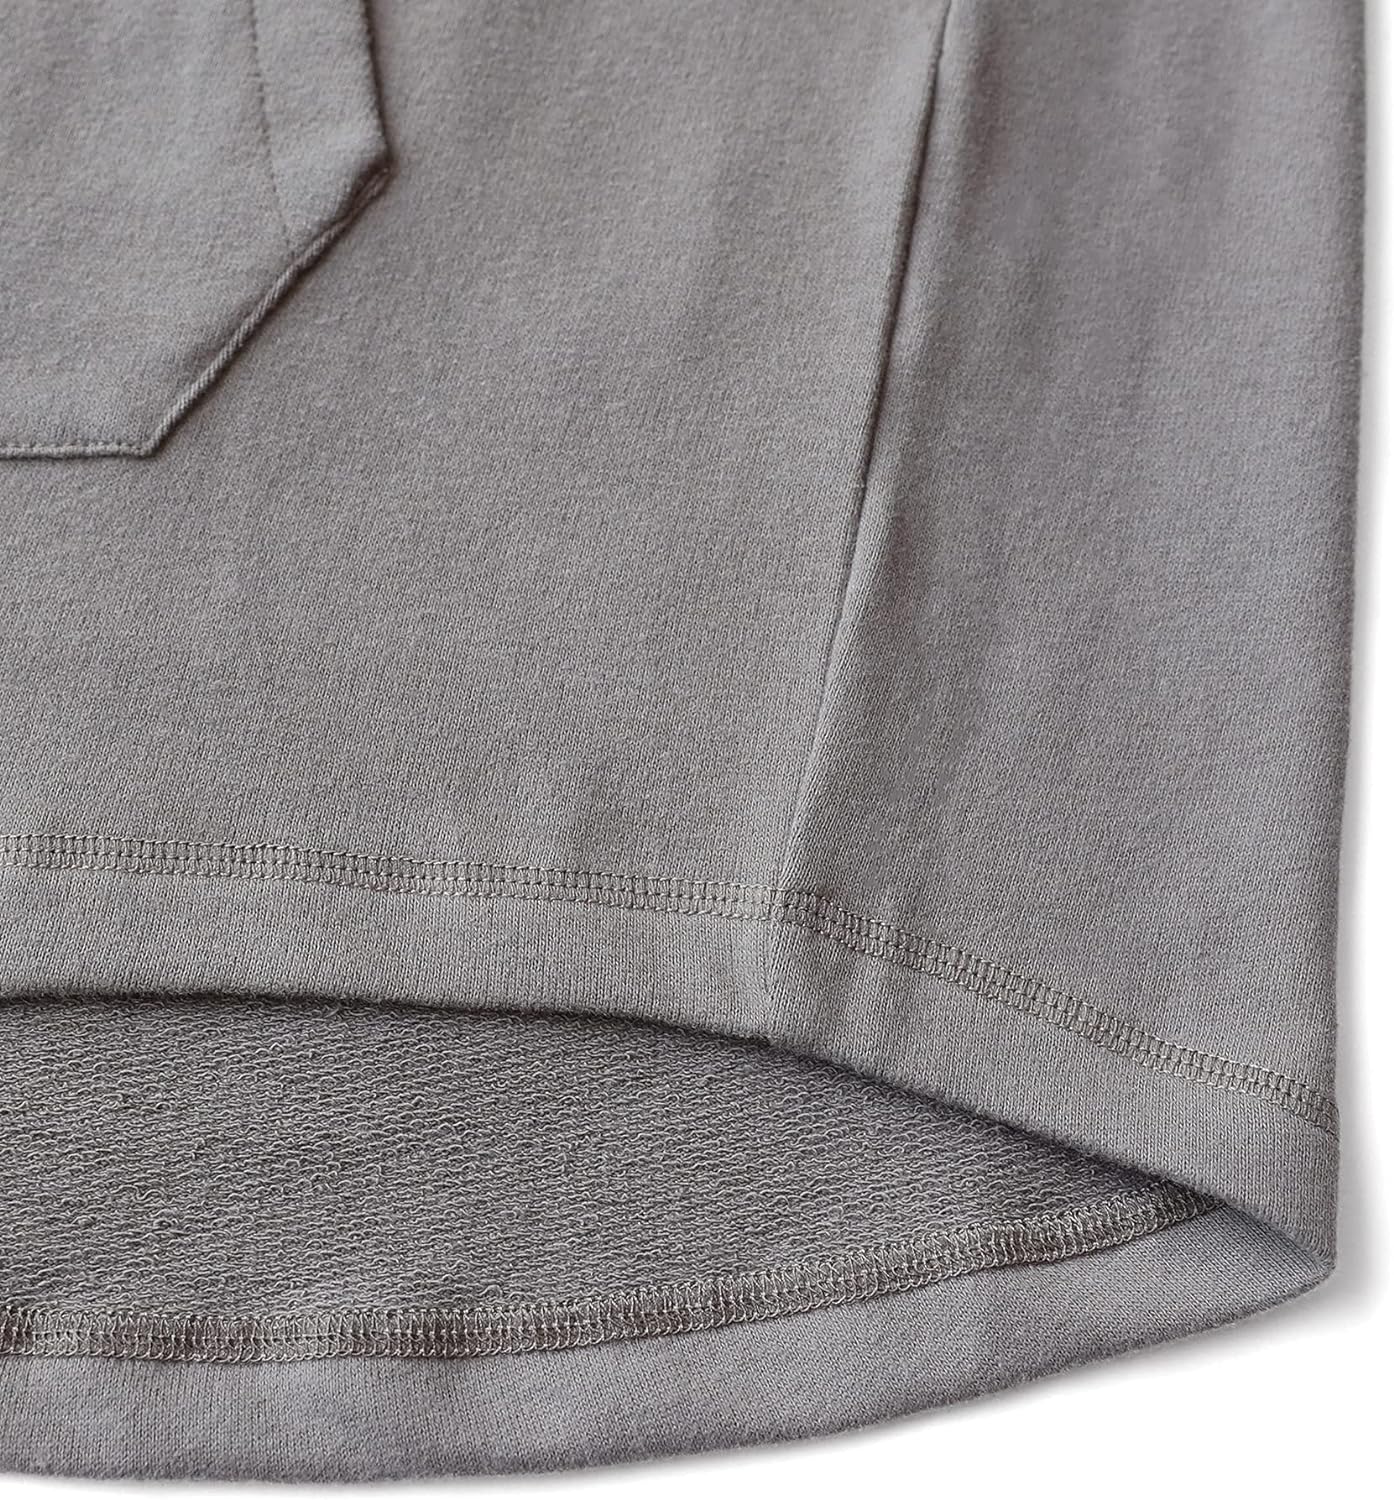 Dubinik® Men's Hooded Shirt Short Sleeve Hoodie Men's Sports Cotton Pockets T-Shirt with Hood Men